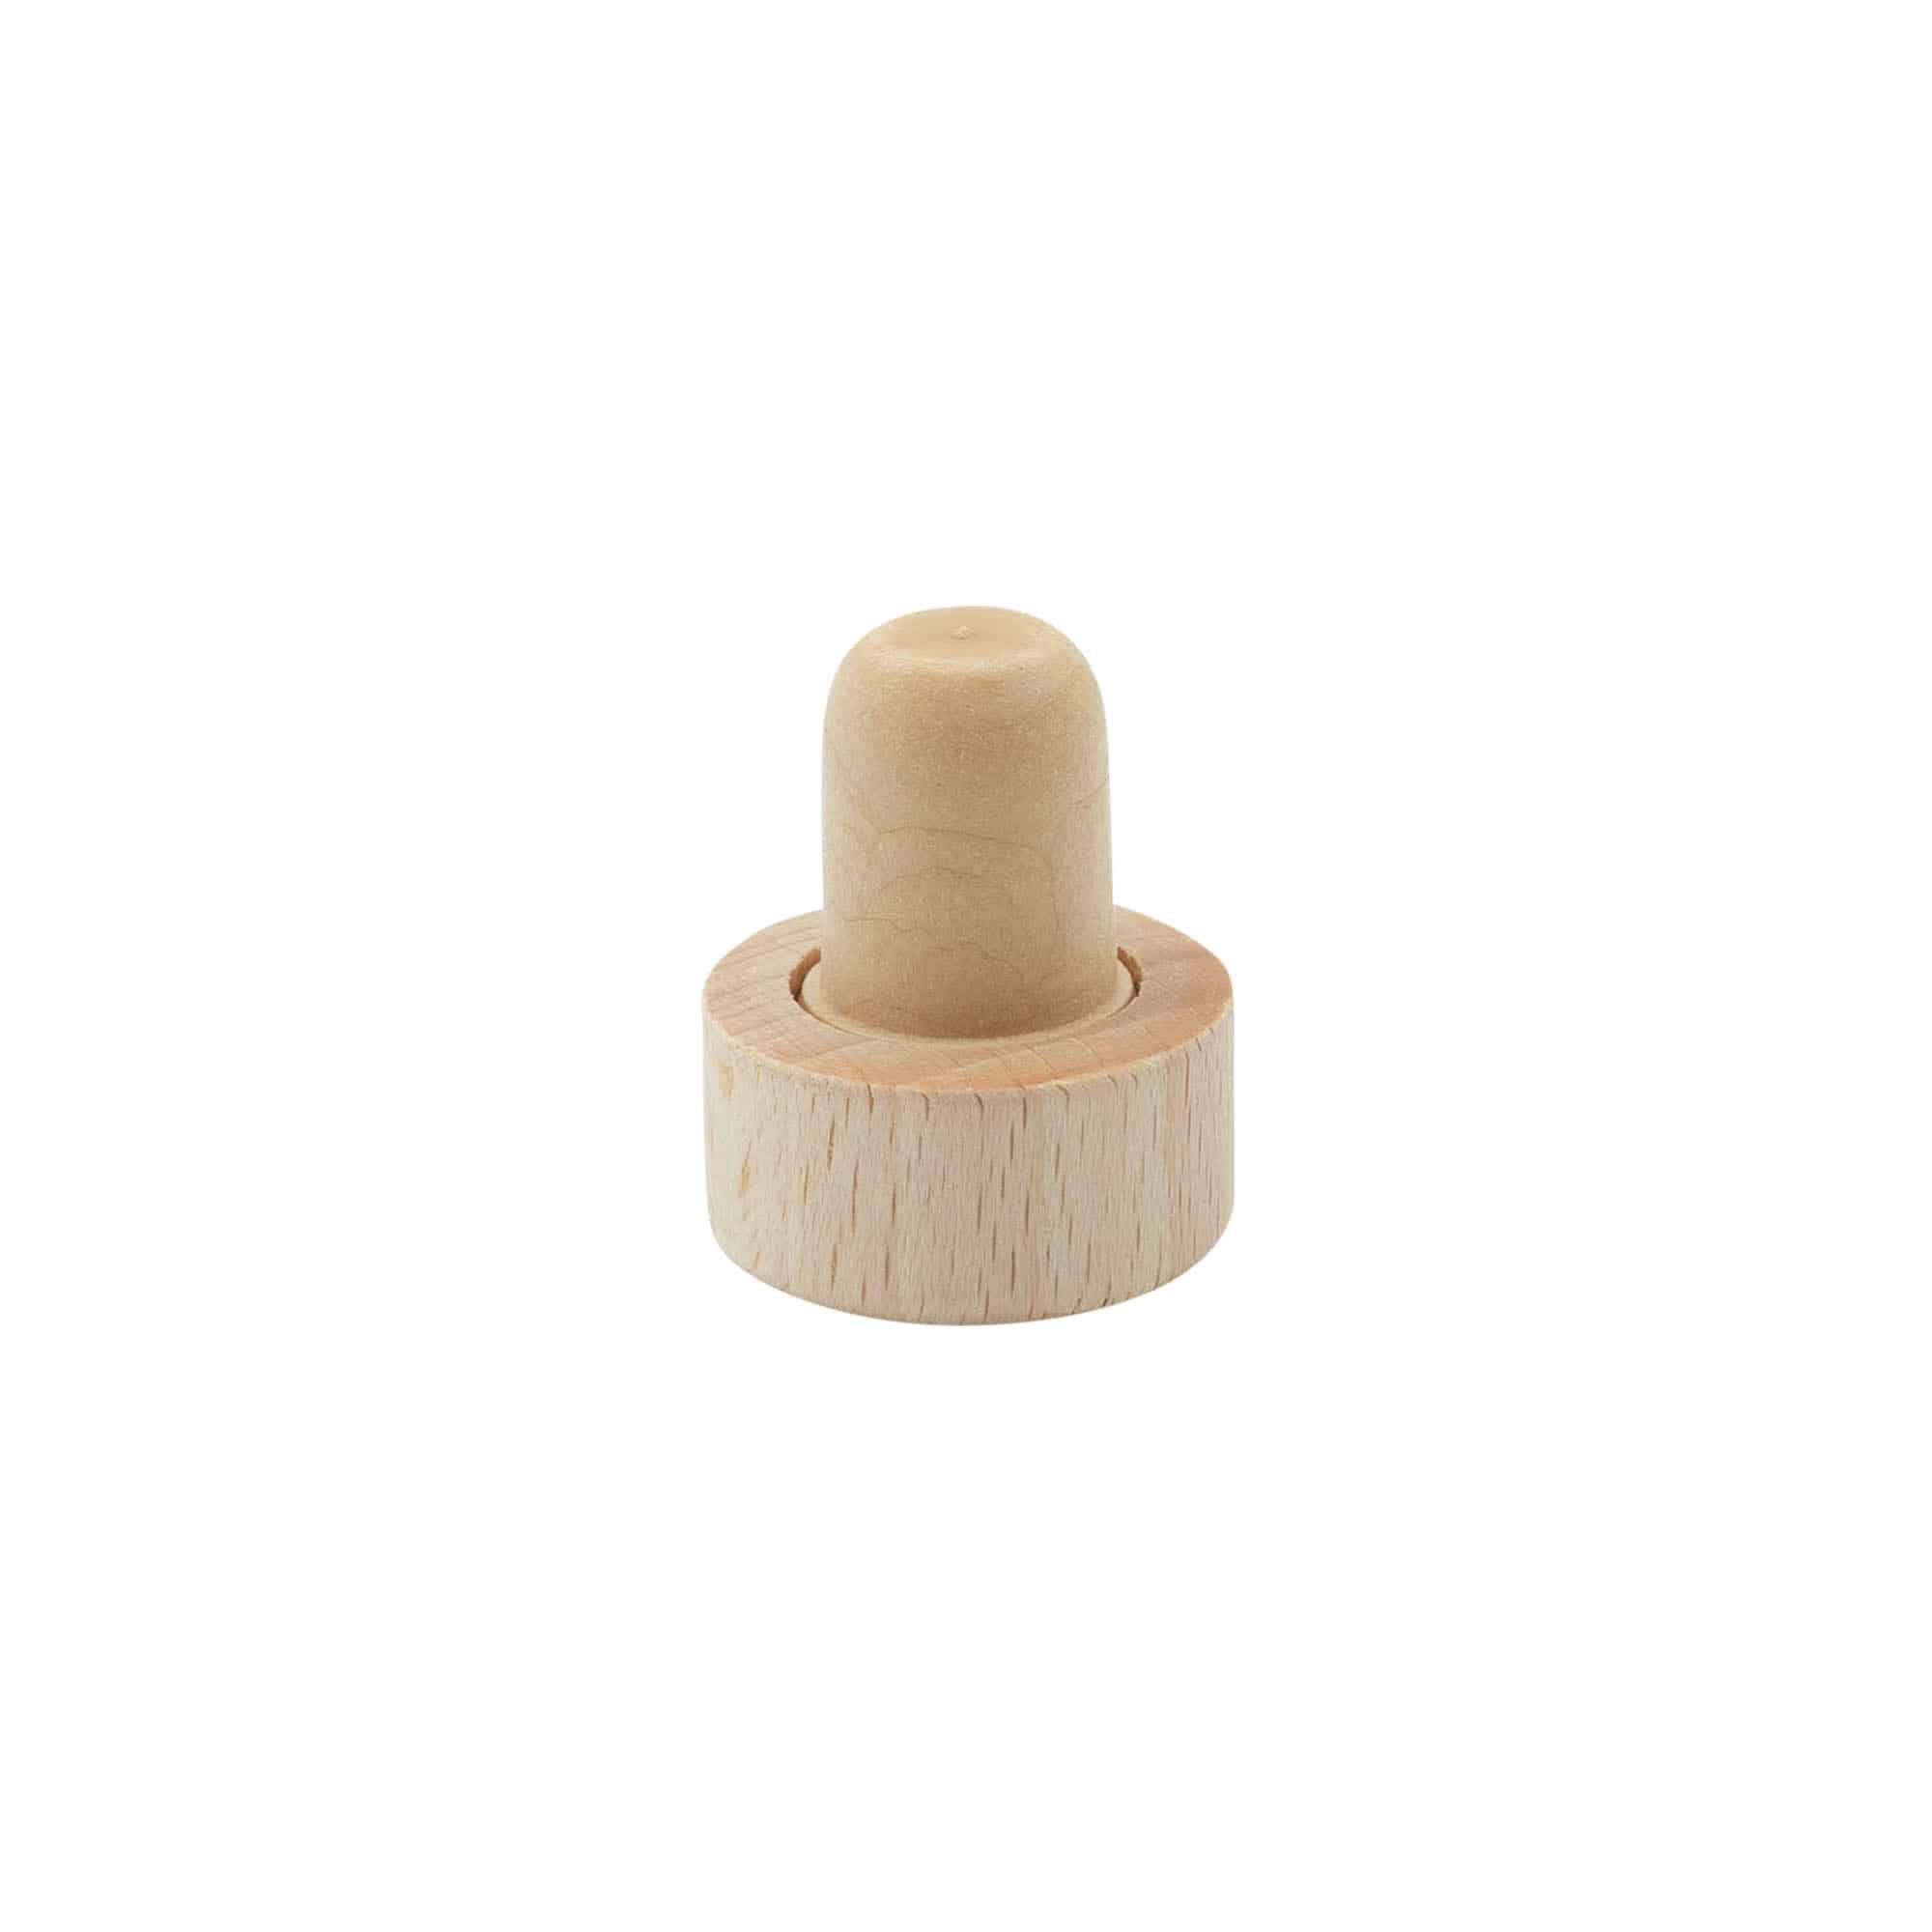 16 mm mushroom cork, plastic/wood, multicolour, for opening: cork